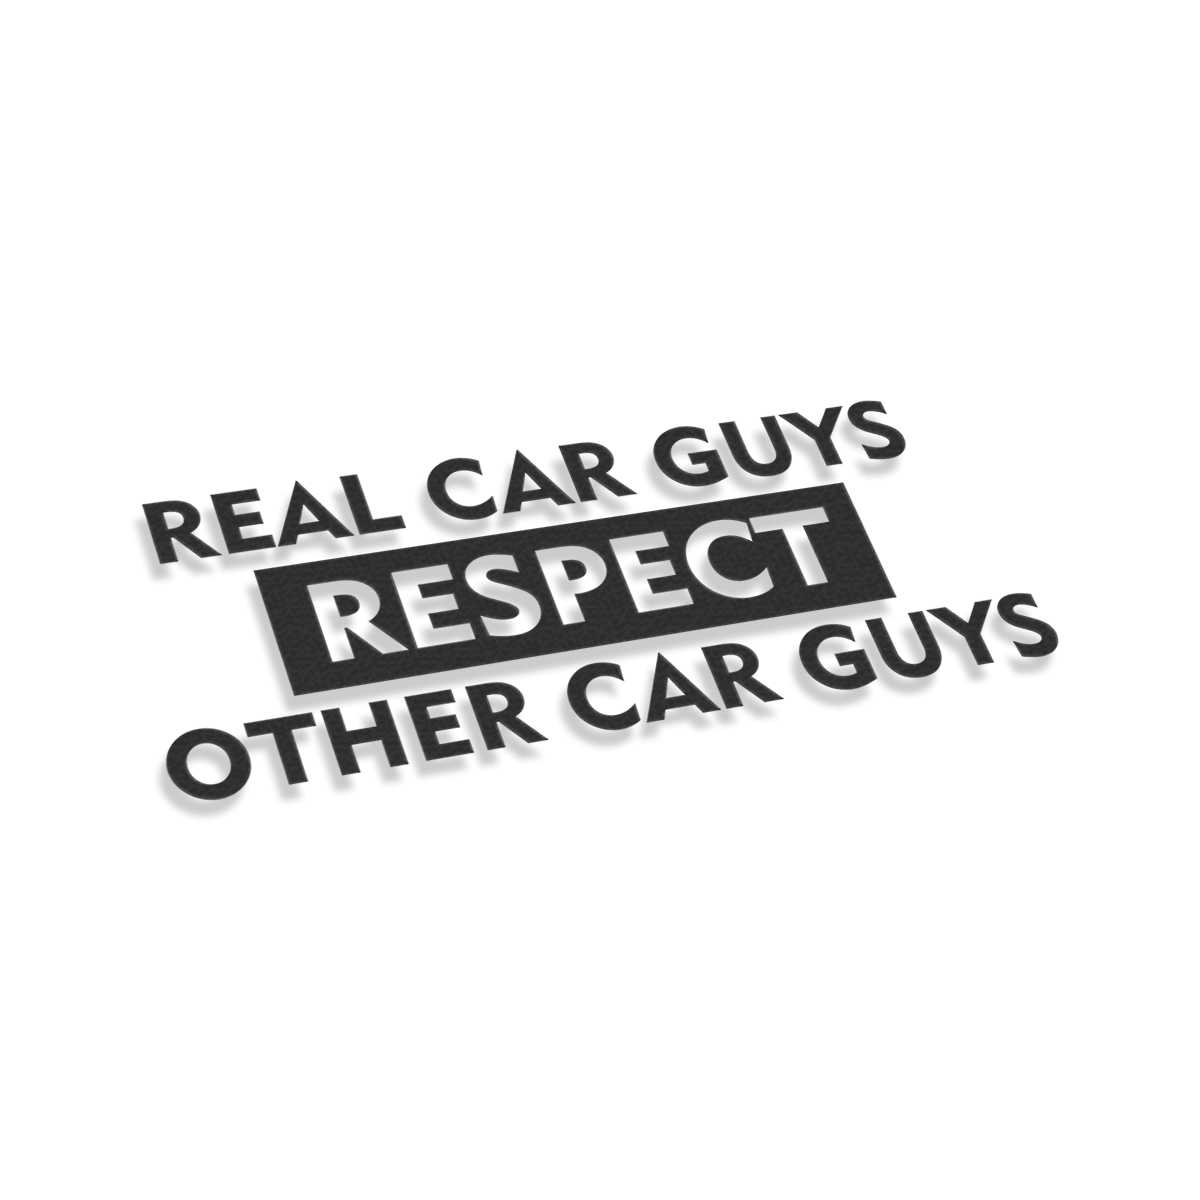 Real Car Guys